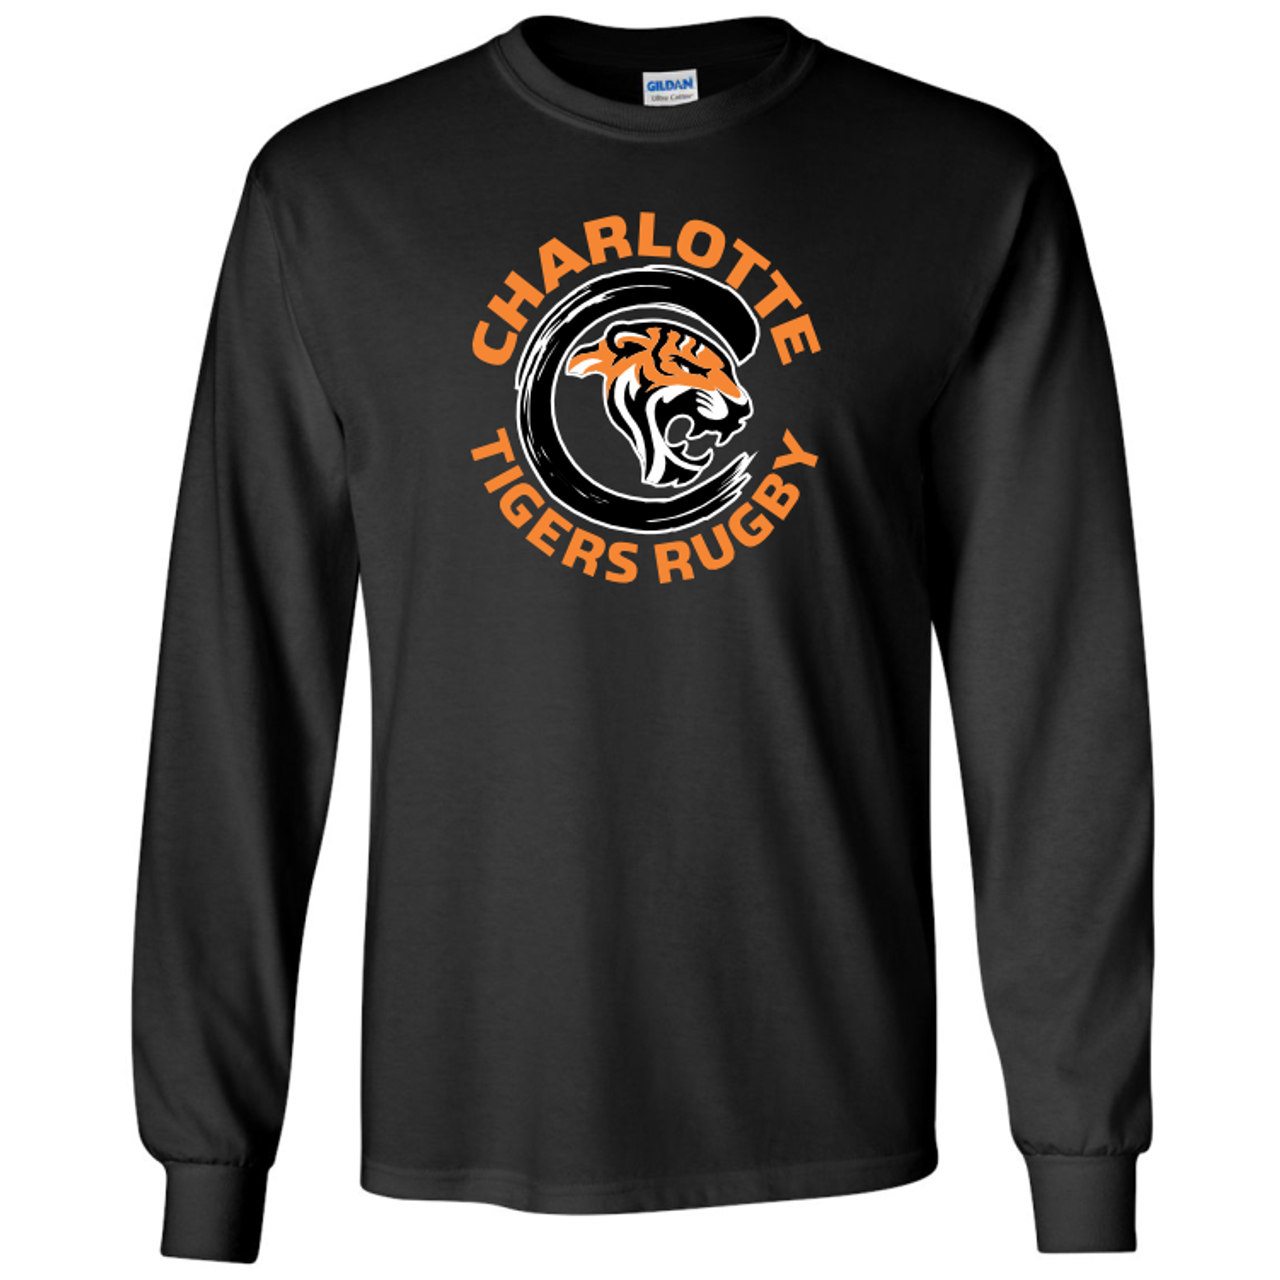 Charlotte Tigers Cotton T-Shirt, Black